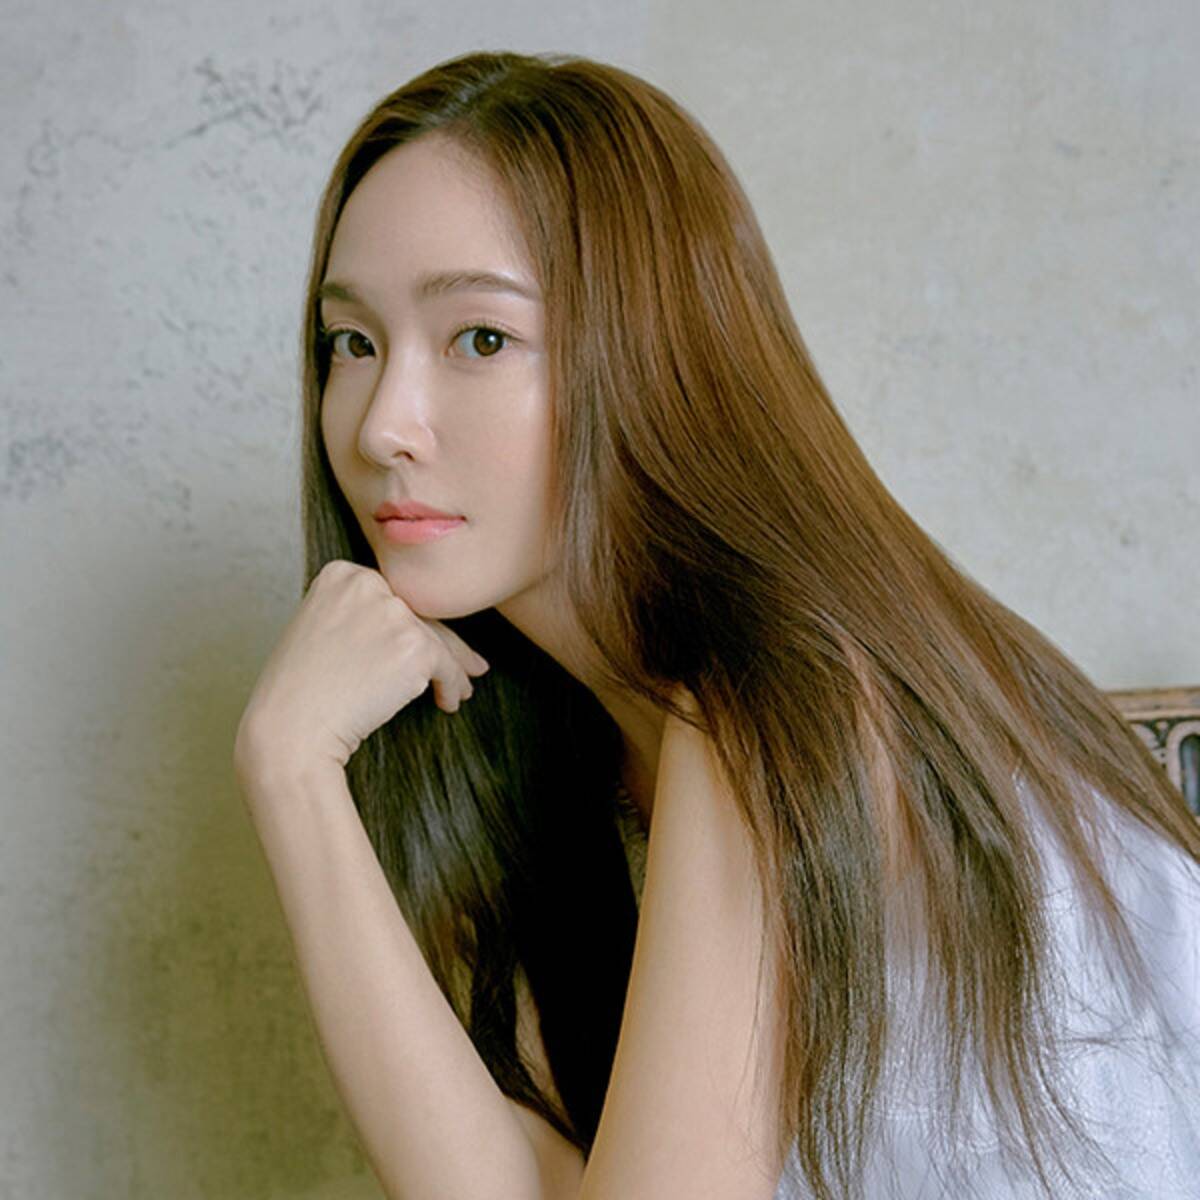 16. Jessica Jung (Girls' Generation) - Main Vocalist